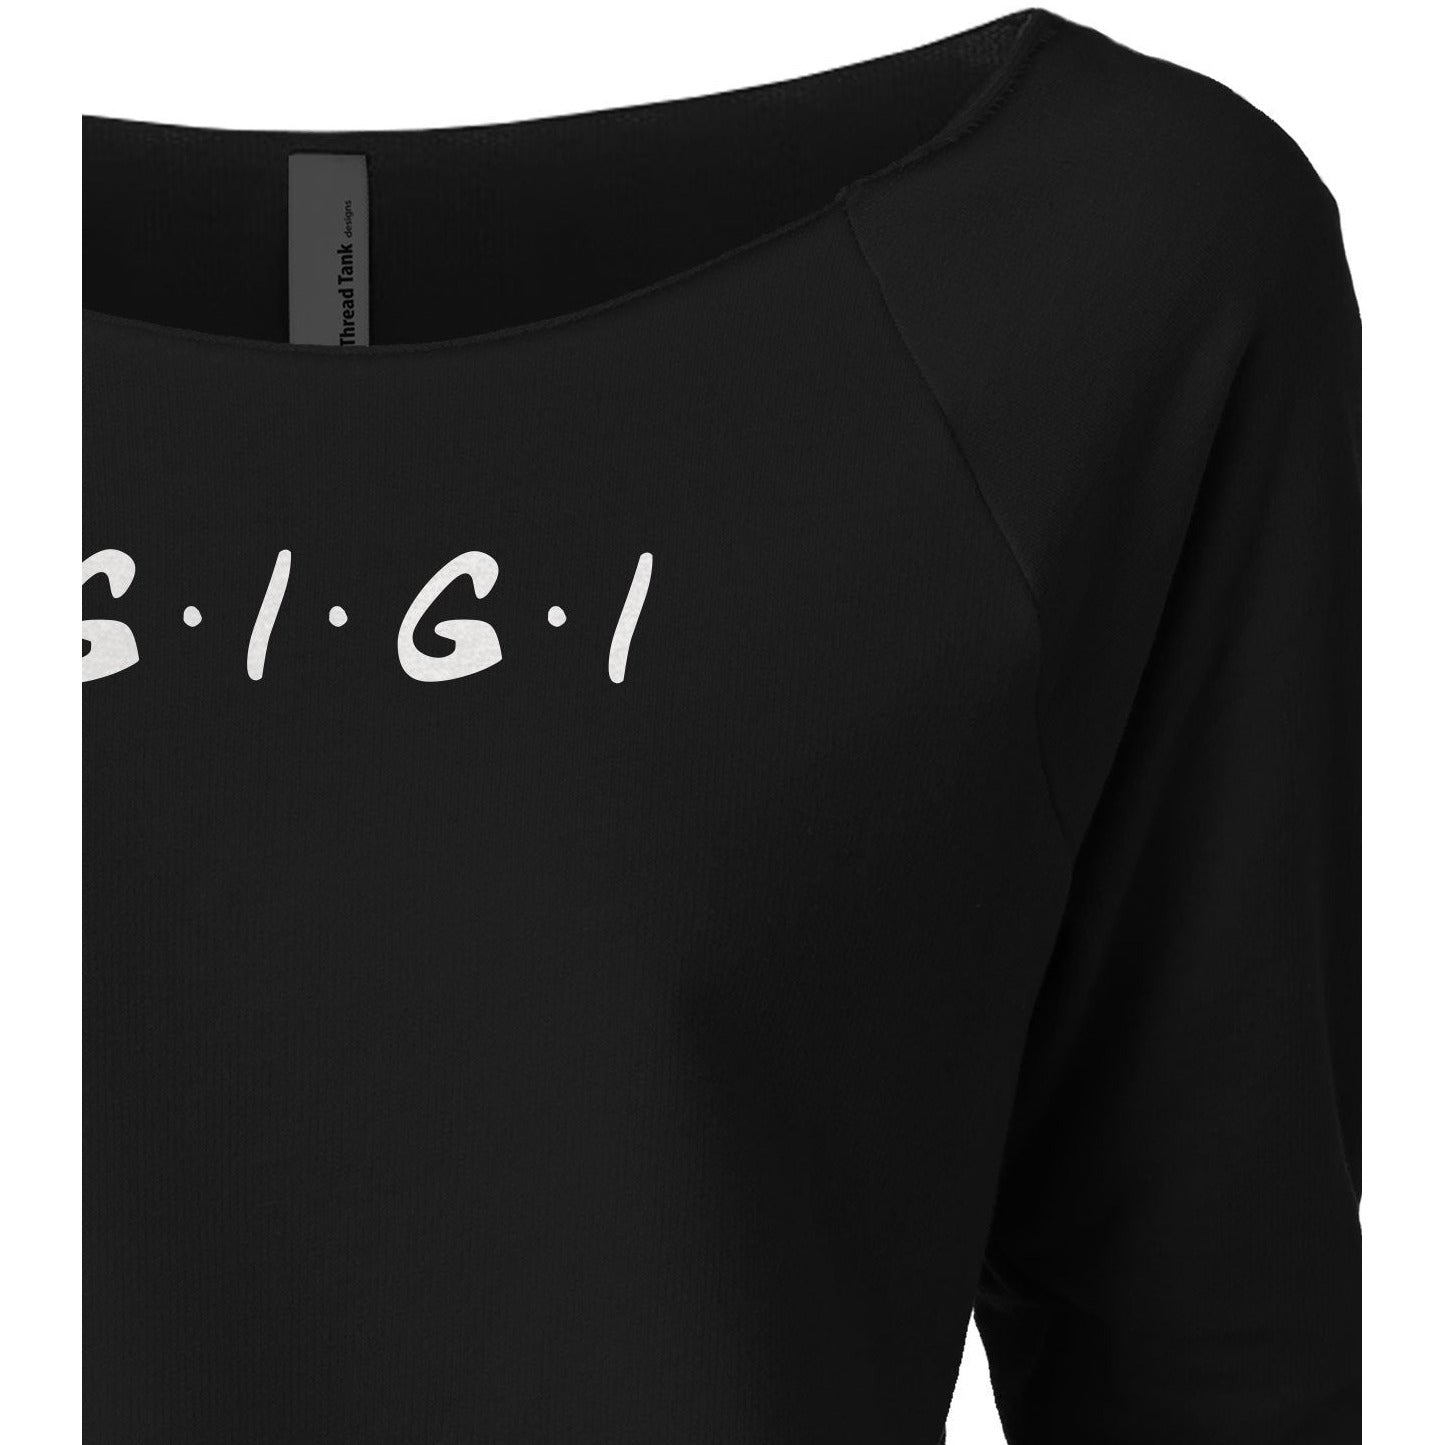 Gigi Friends Women's Graphic Printed Lightweight Slouchy 3/4 Sleeves Sweatshirt Black Closeup